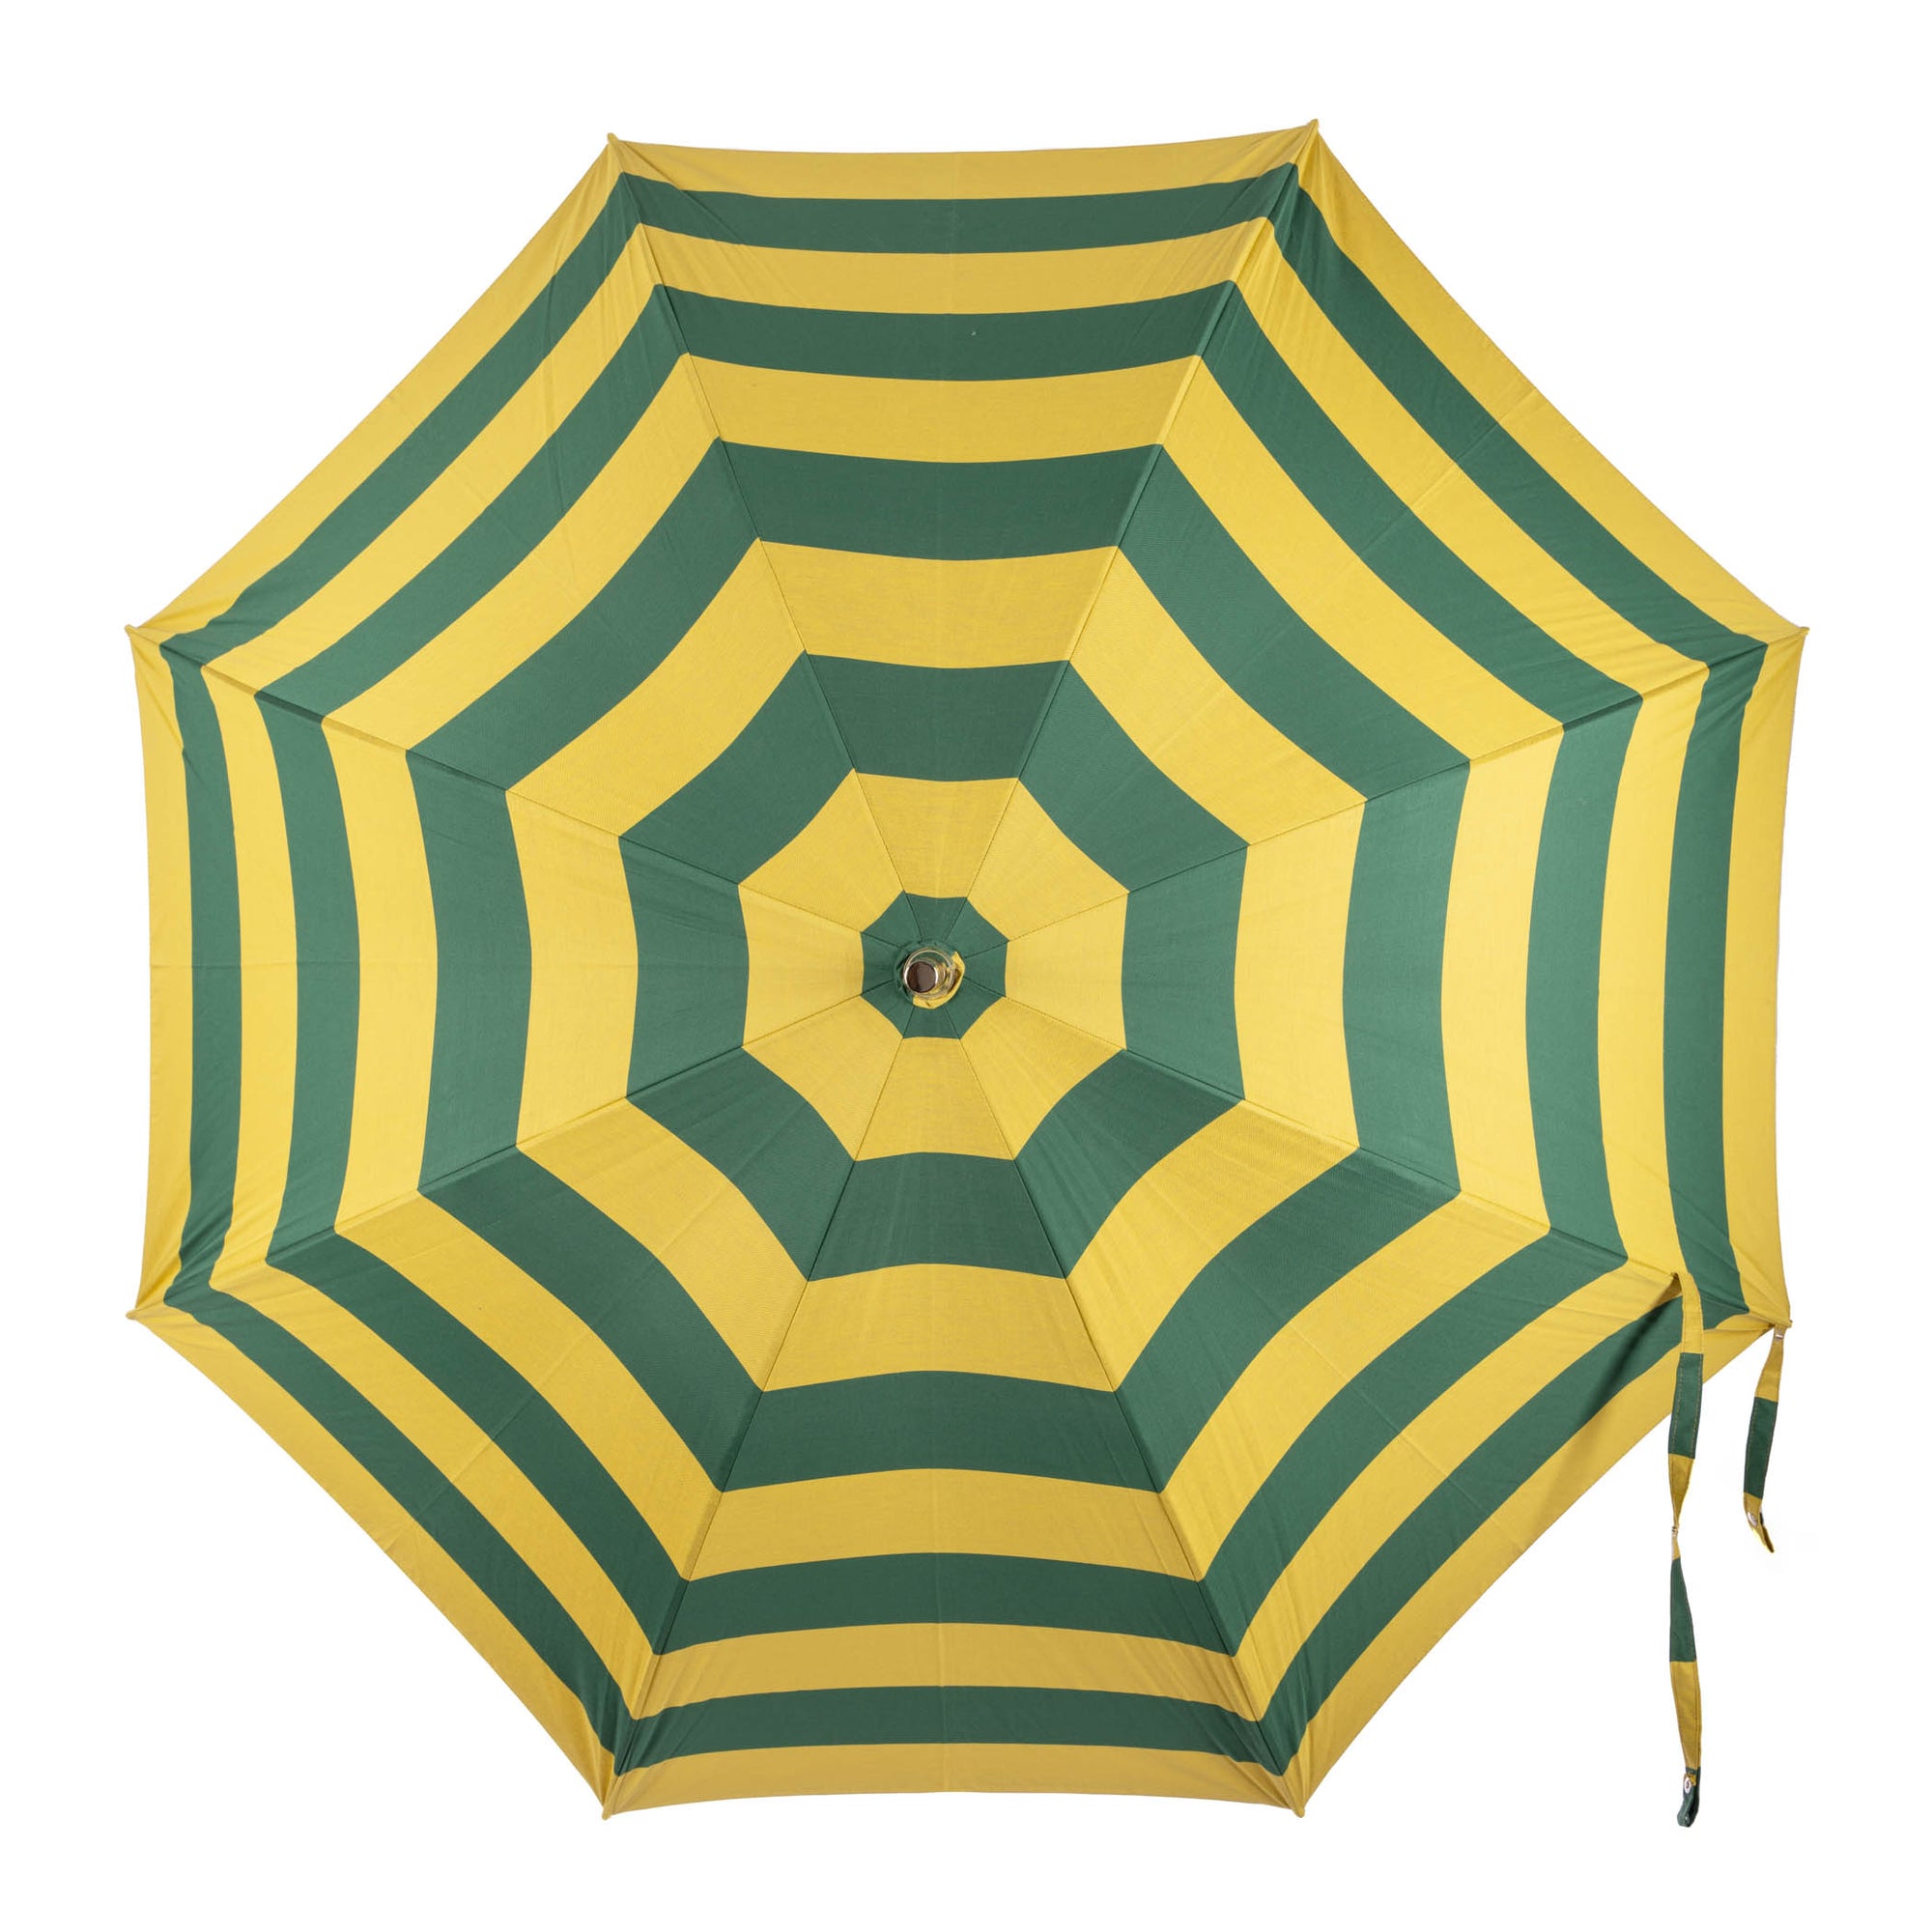 Polished Chestnut Picnic Umbrella